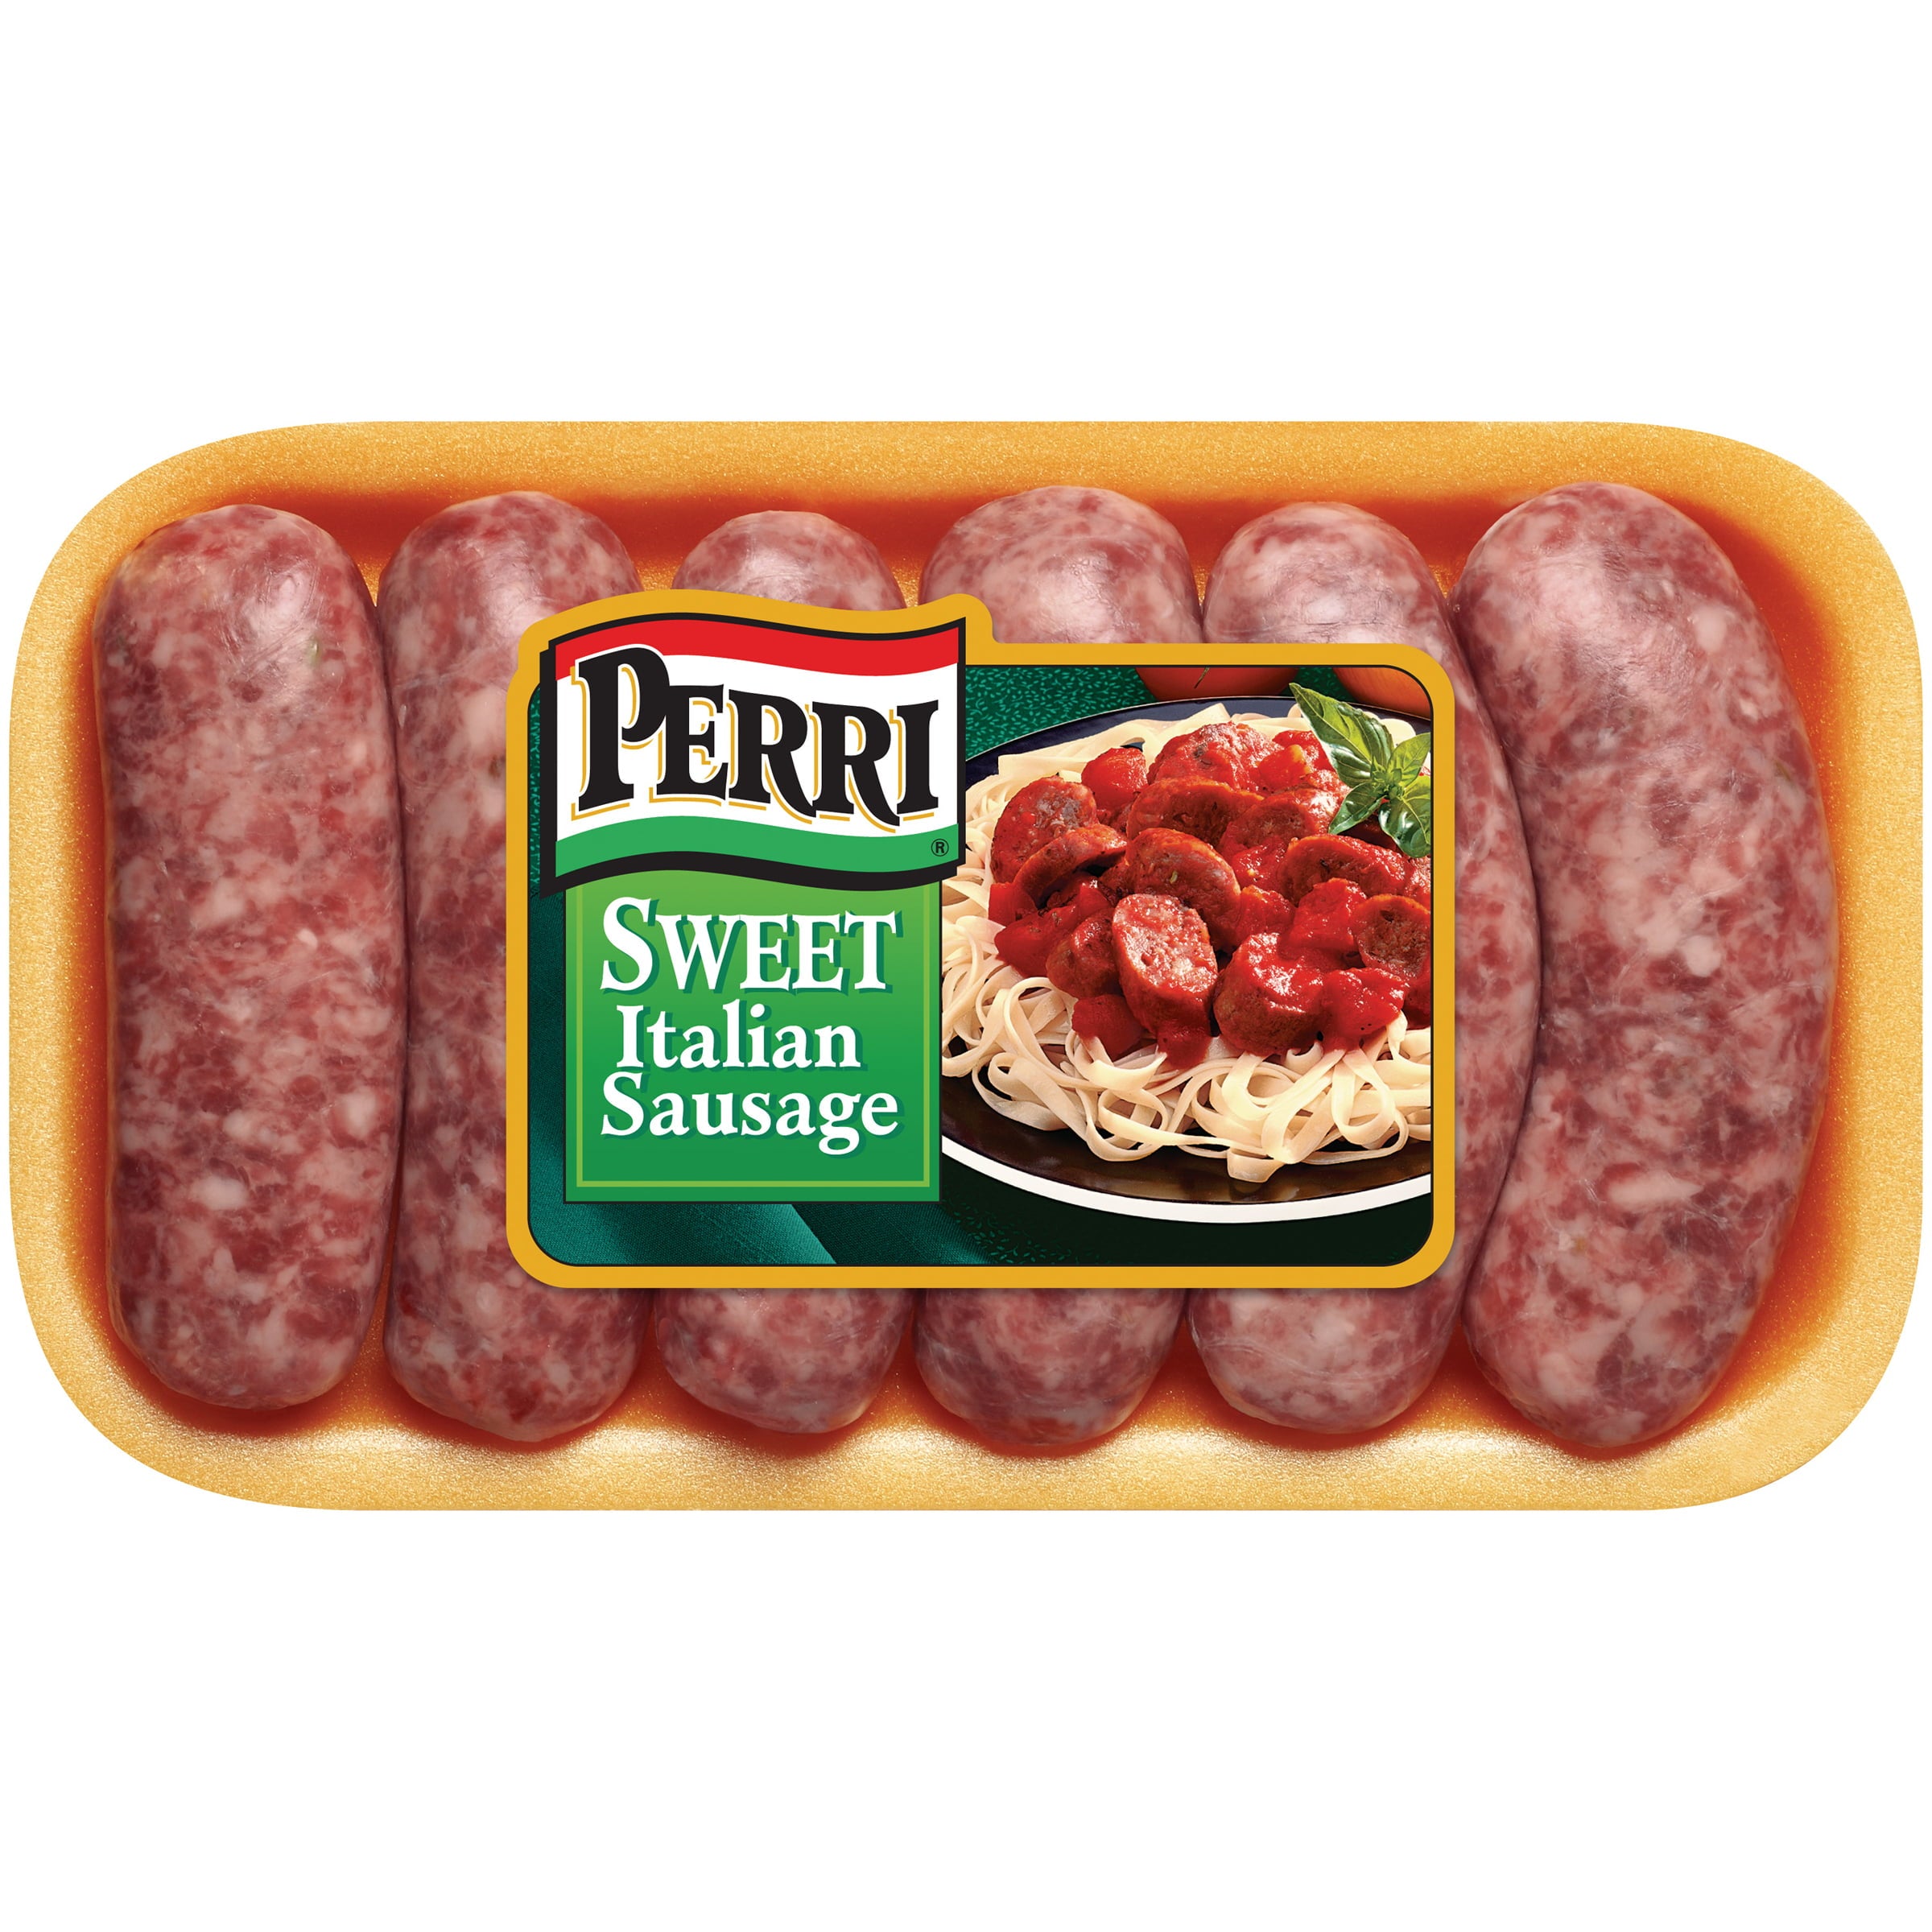 Perri Sweet Italian Sausage, 6 Links, 16 oz